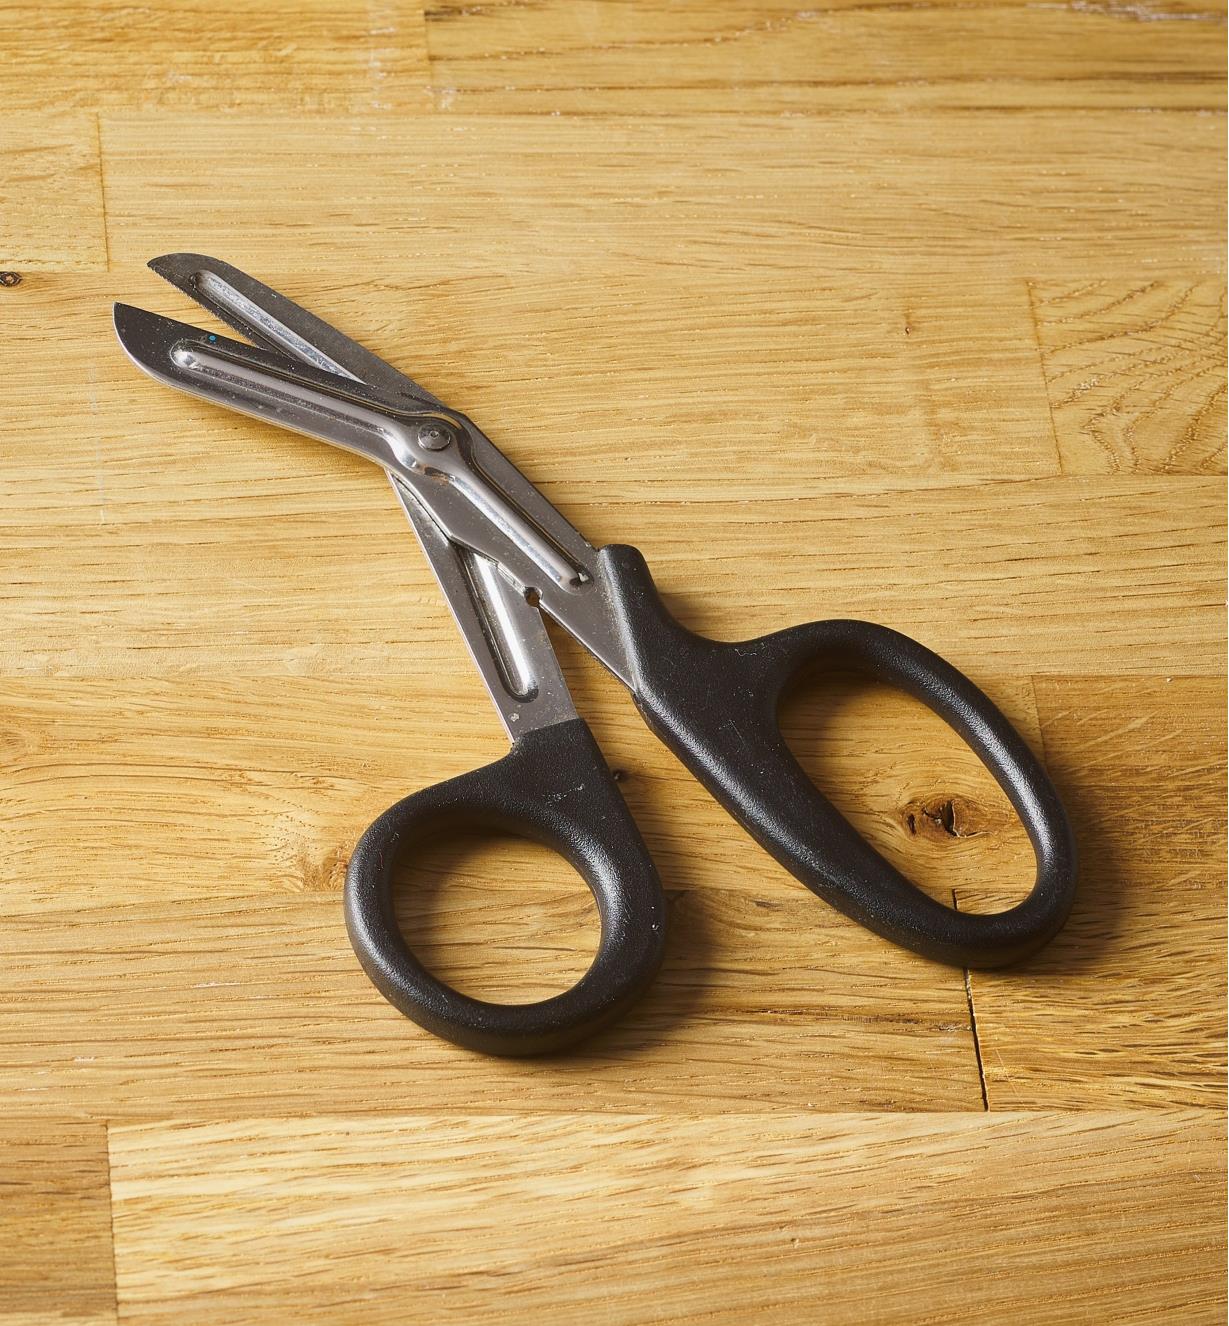 Clamshell Scissors - Lee Valley Tools